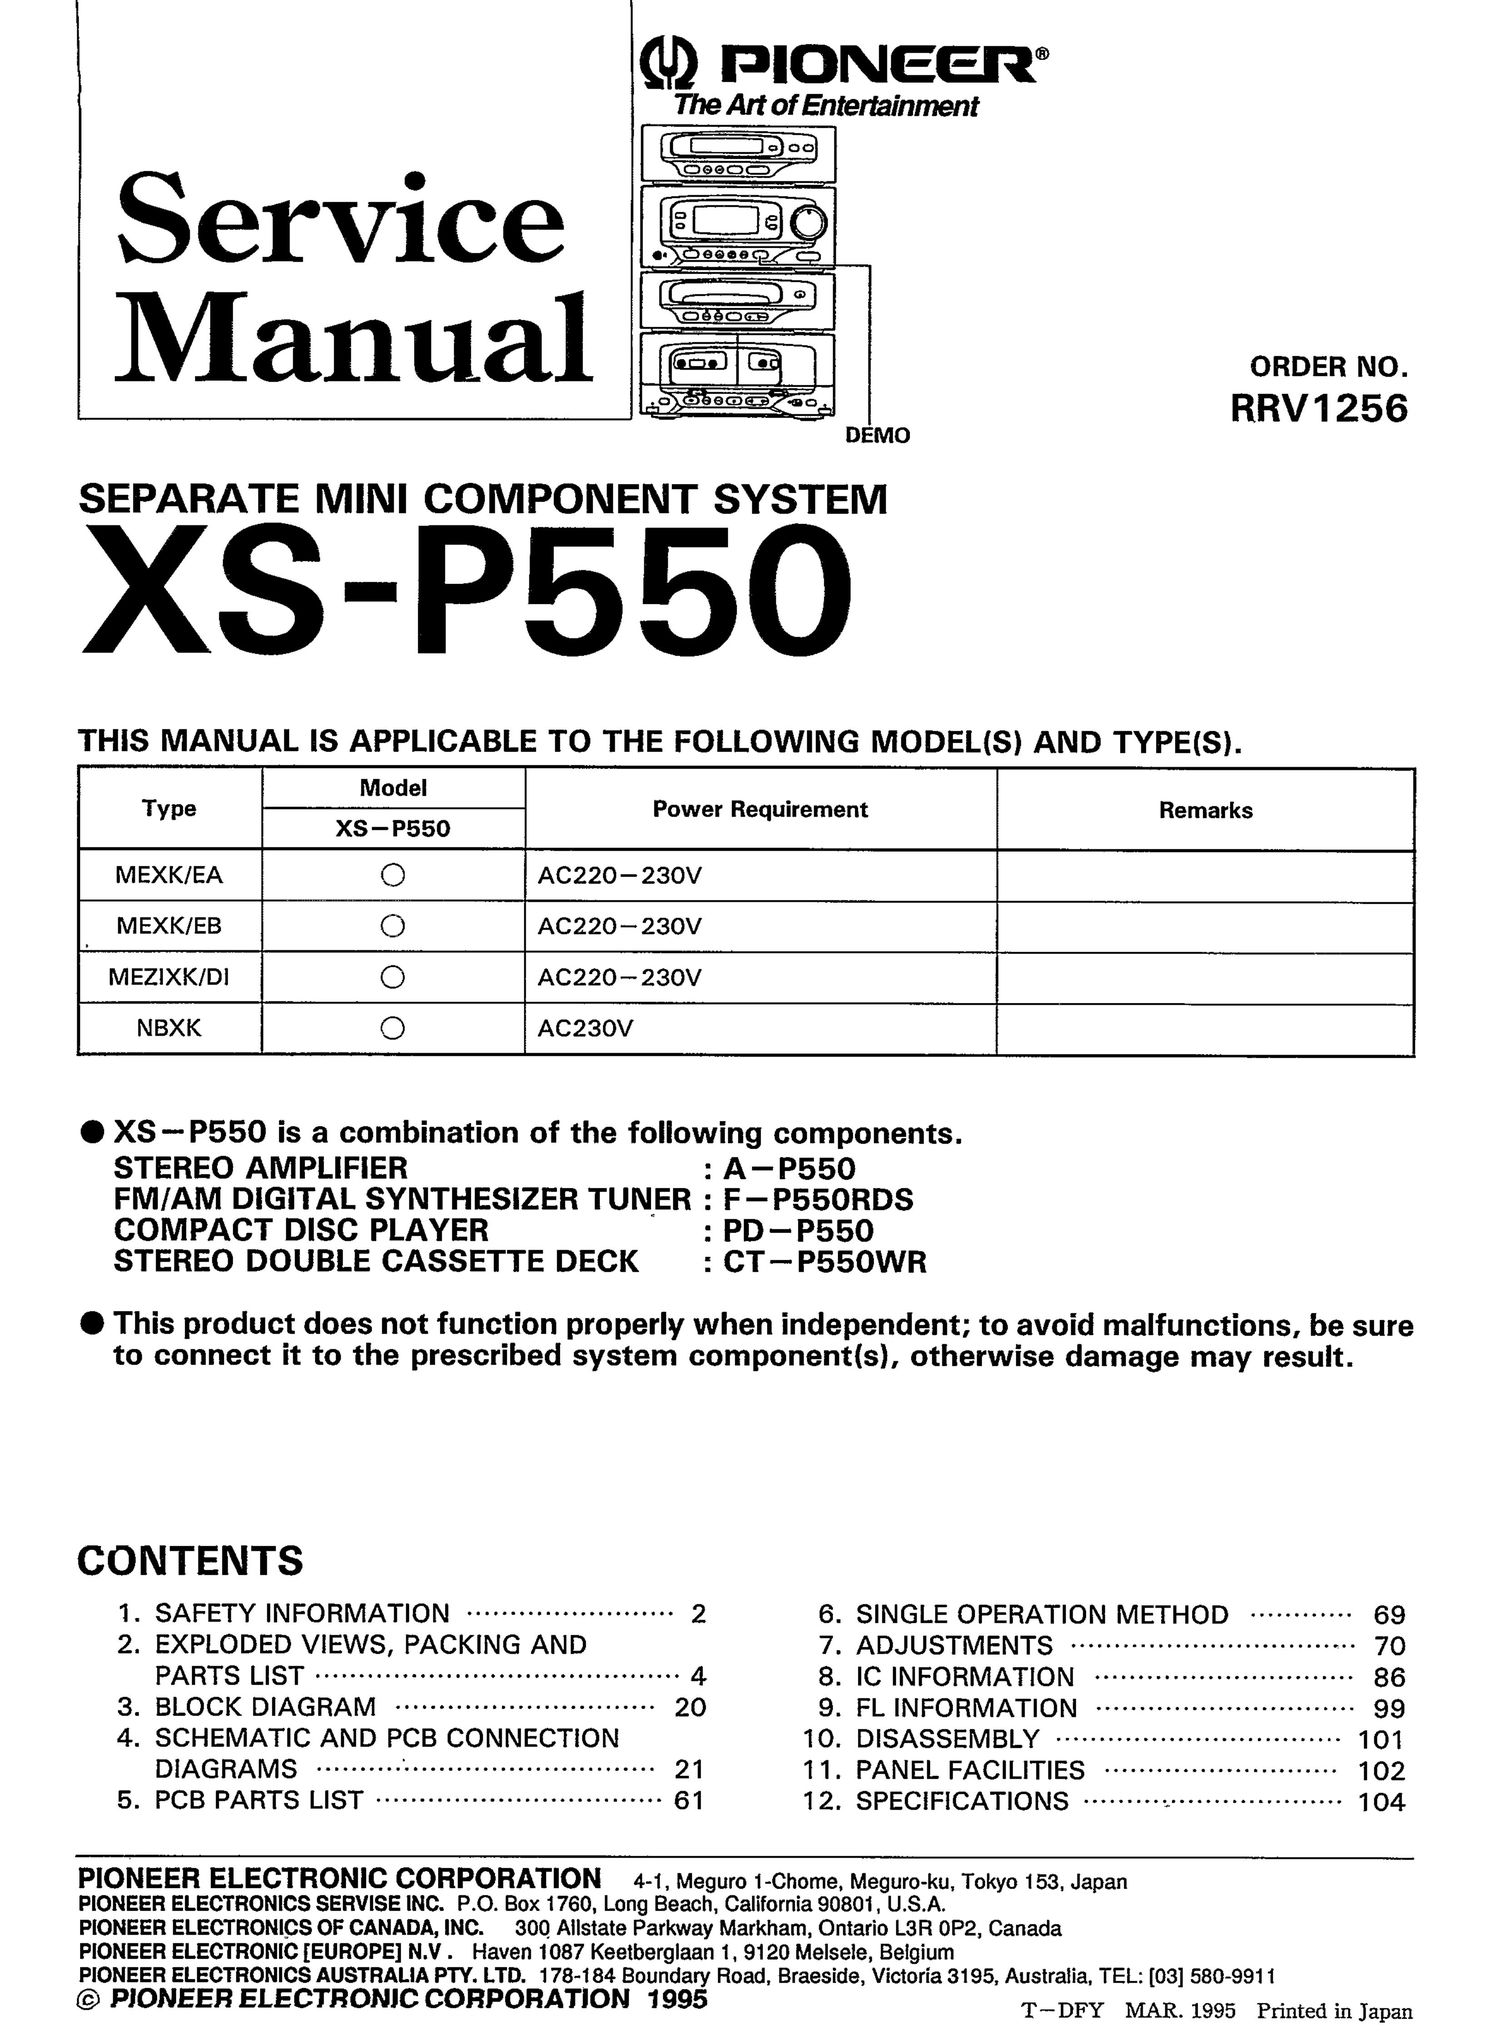 pioneer xsp 550 service manual